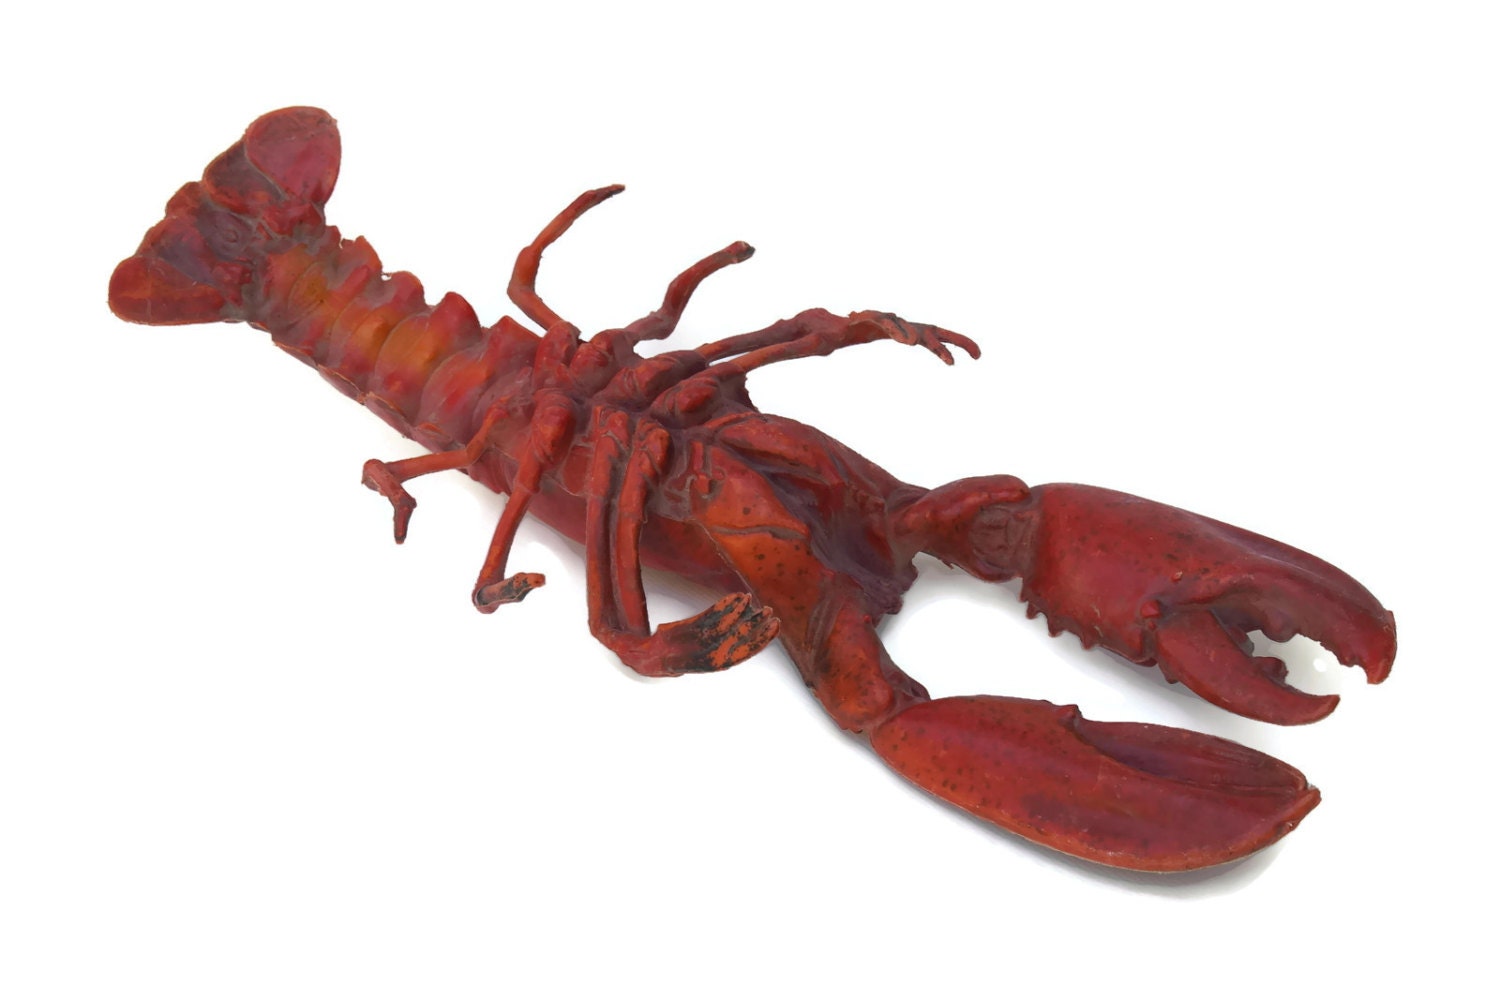 Giant Lobster. Seafood Store Display. Fake Food Prop. Lobster